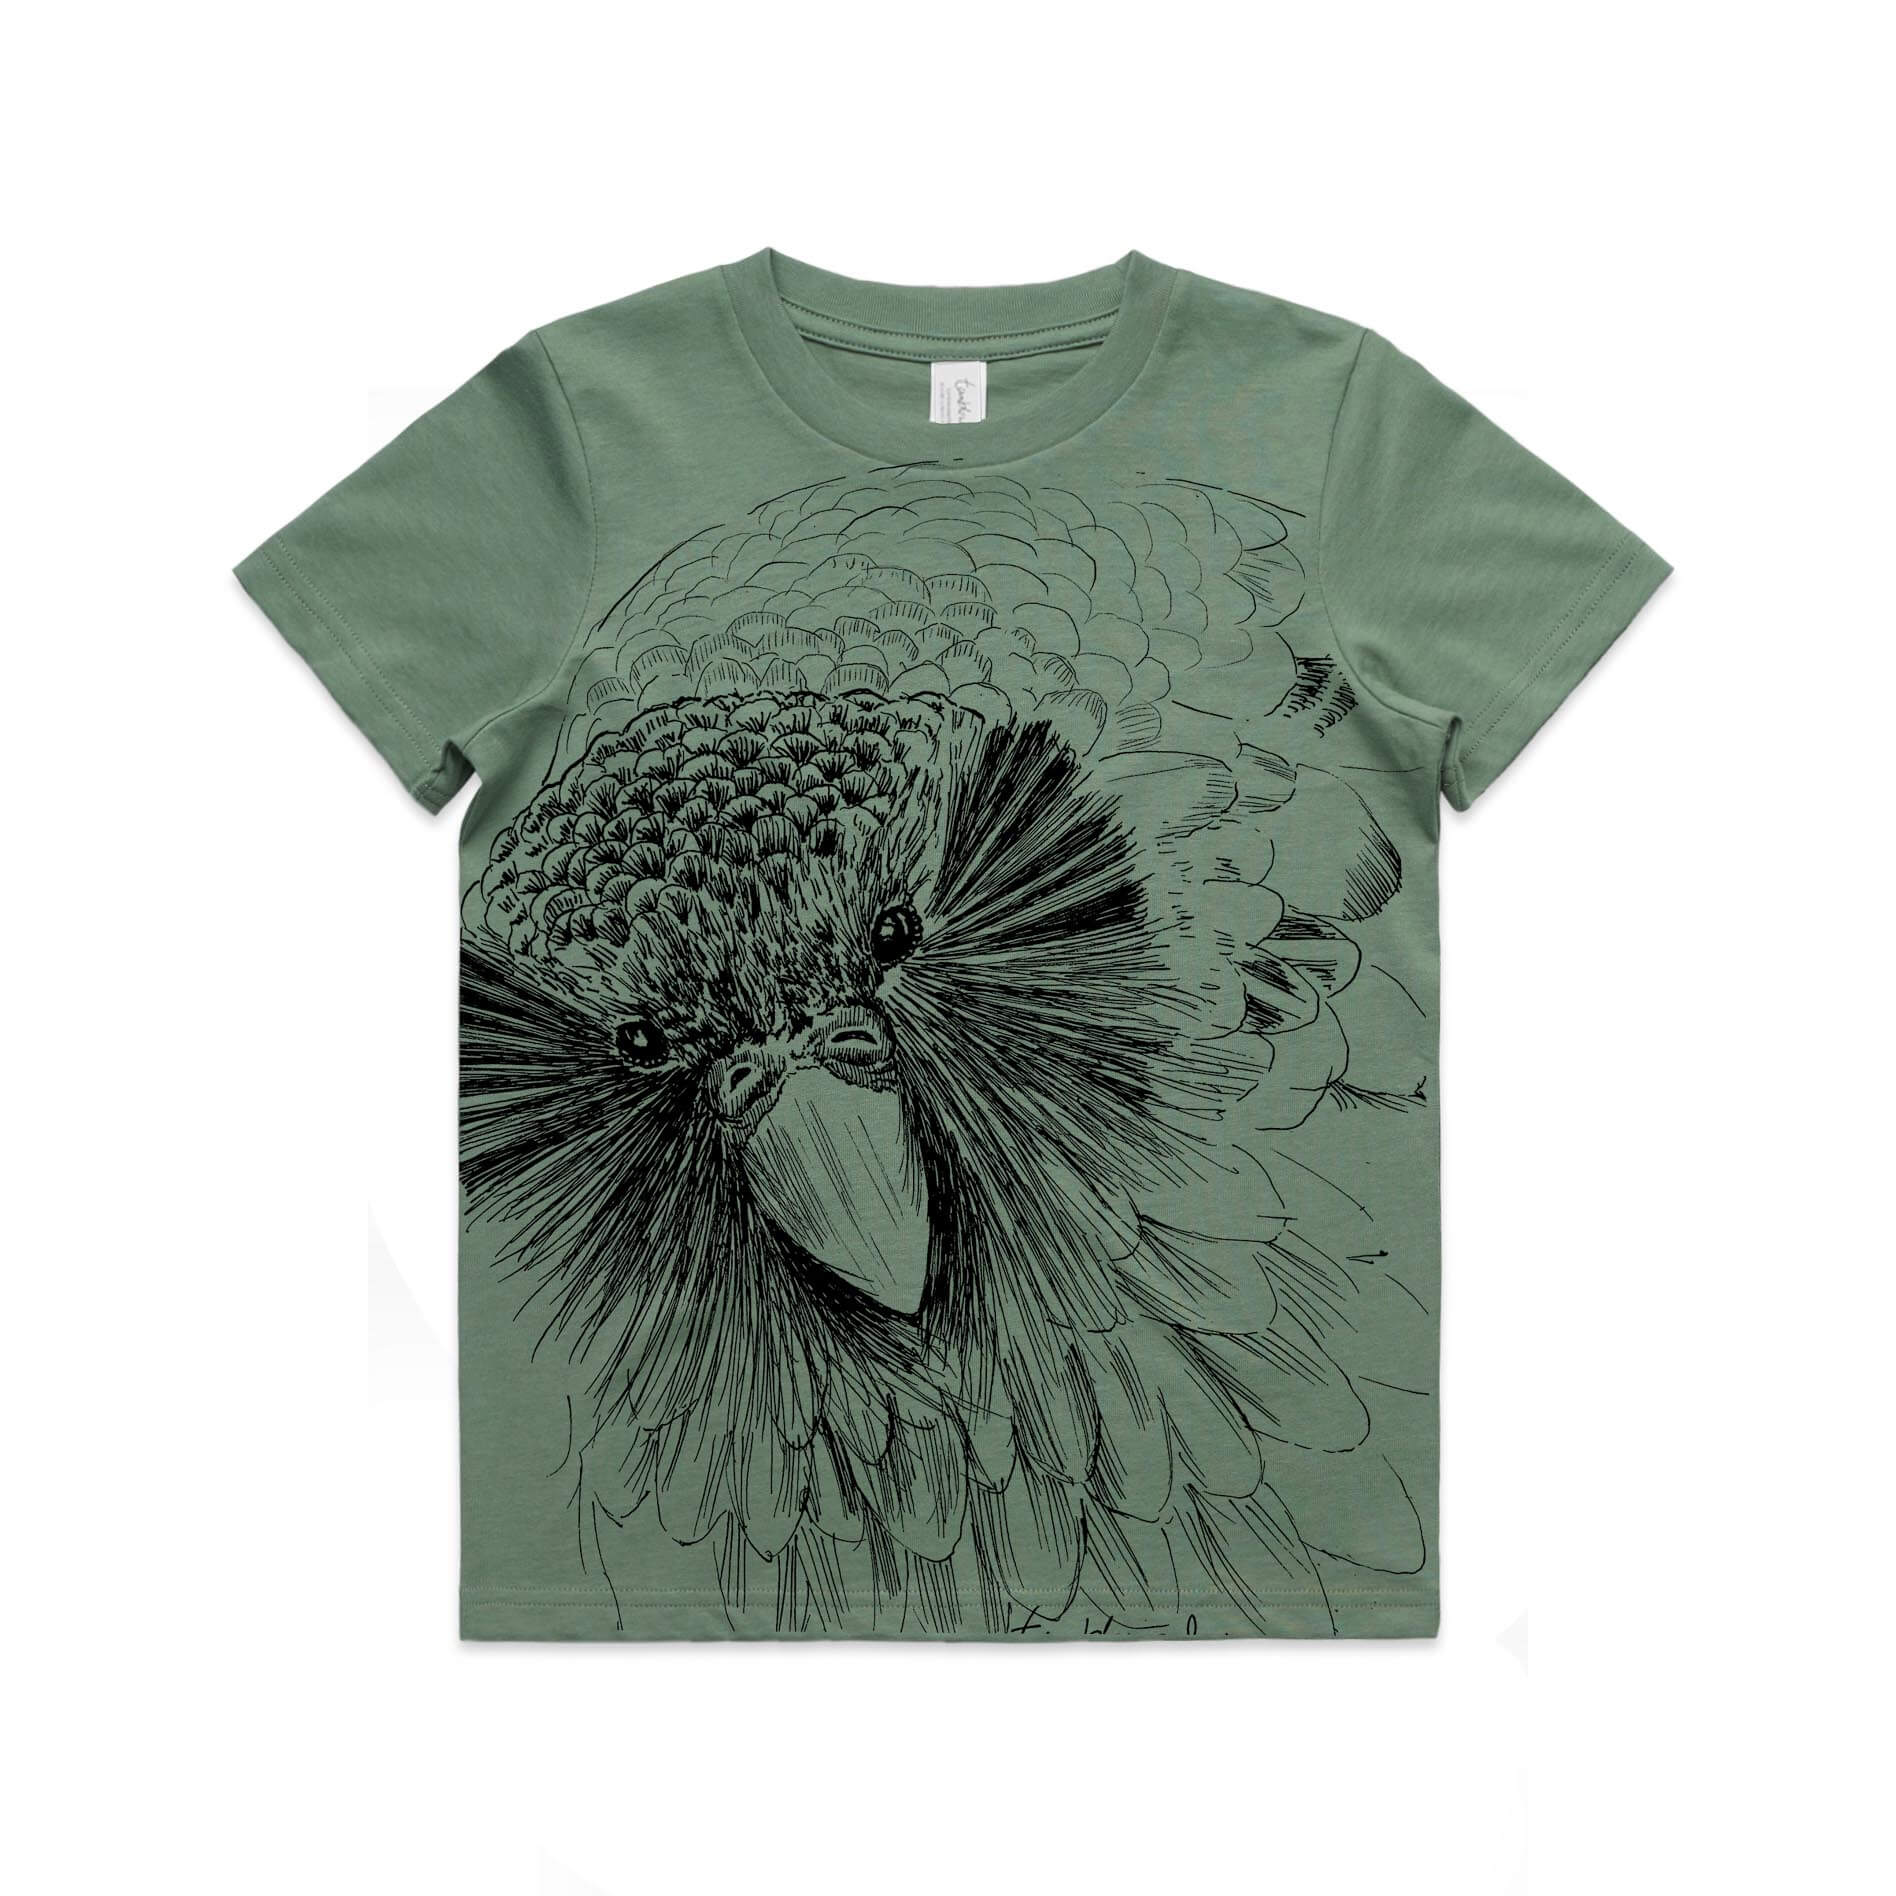 Sage, cotton kids' t-shirt with screen printed Sirocco the Kakapo design.